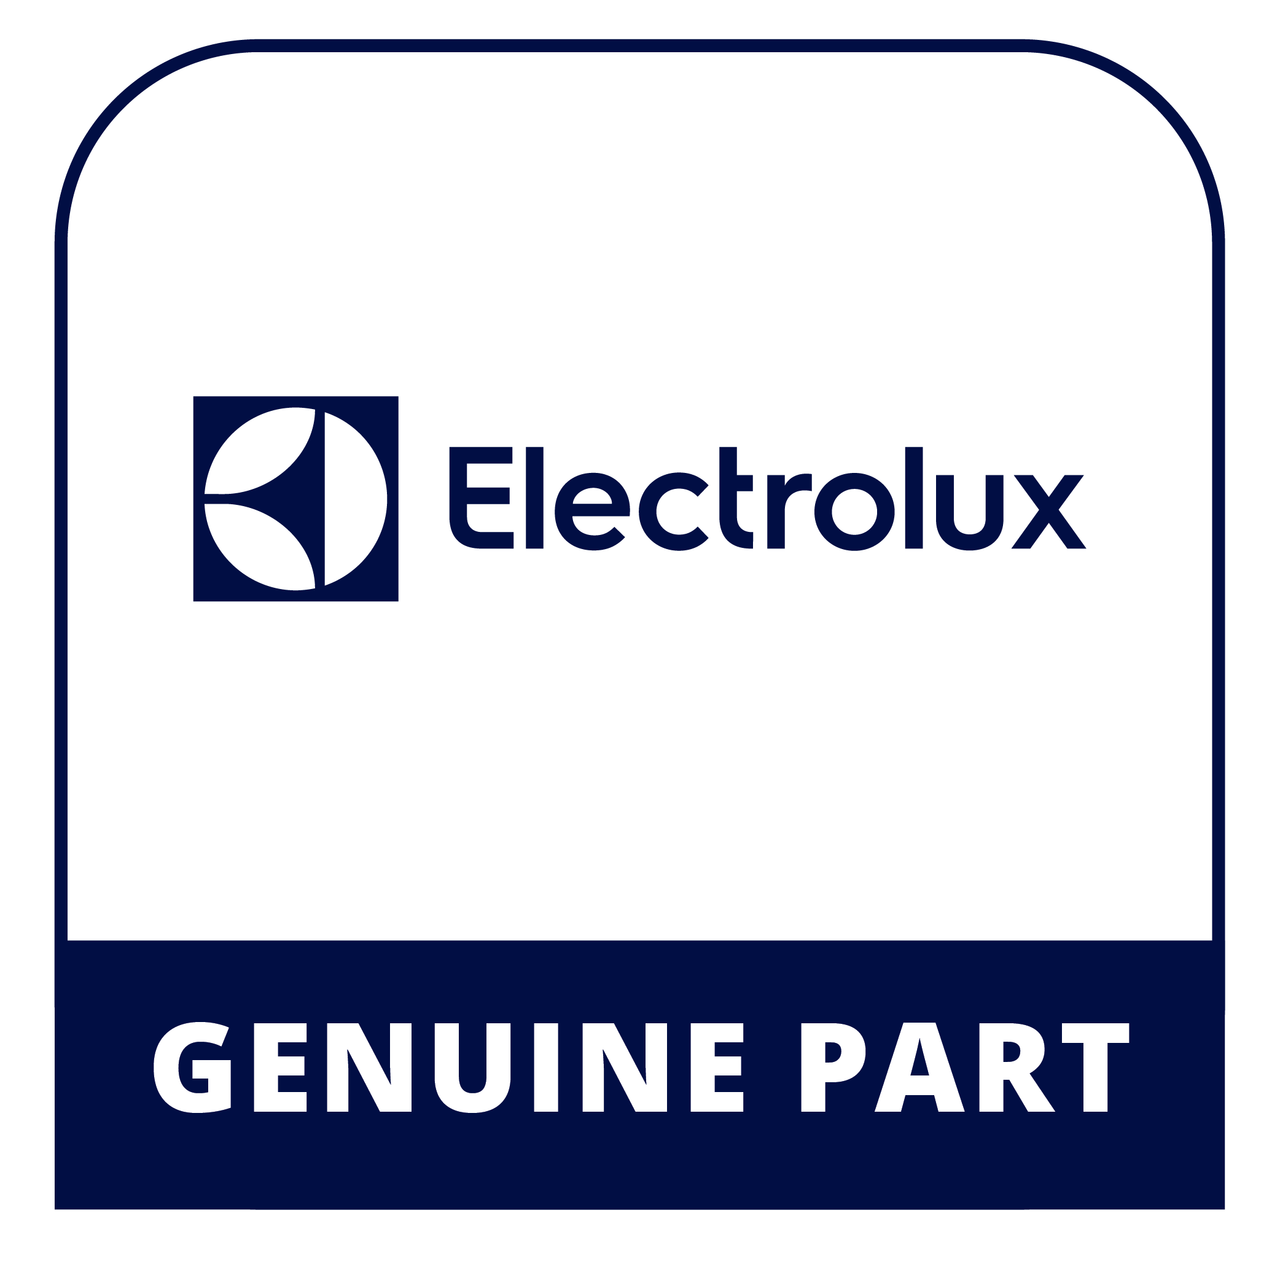 Frigidaire - Electrolux 5304467513 Cover - Genuine Electrolux Part